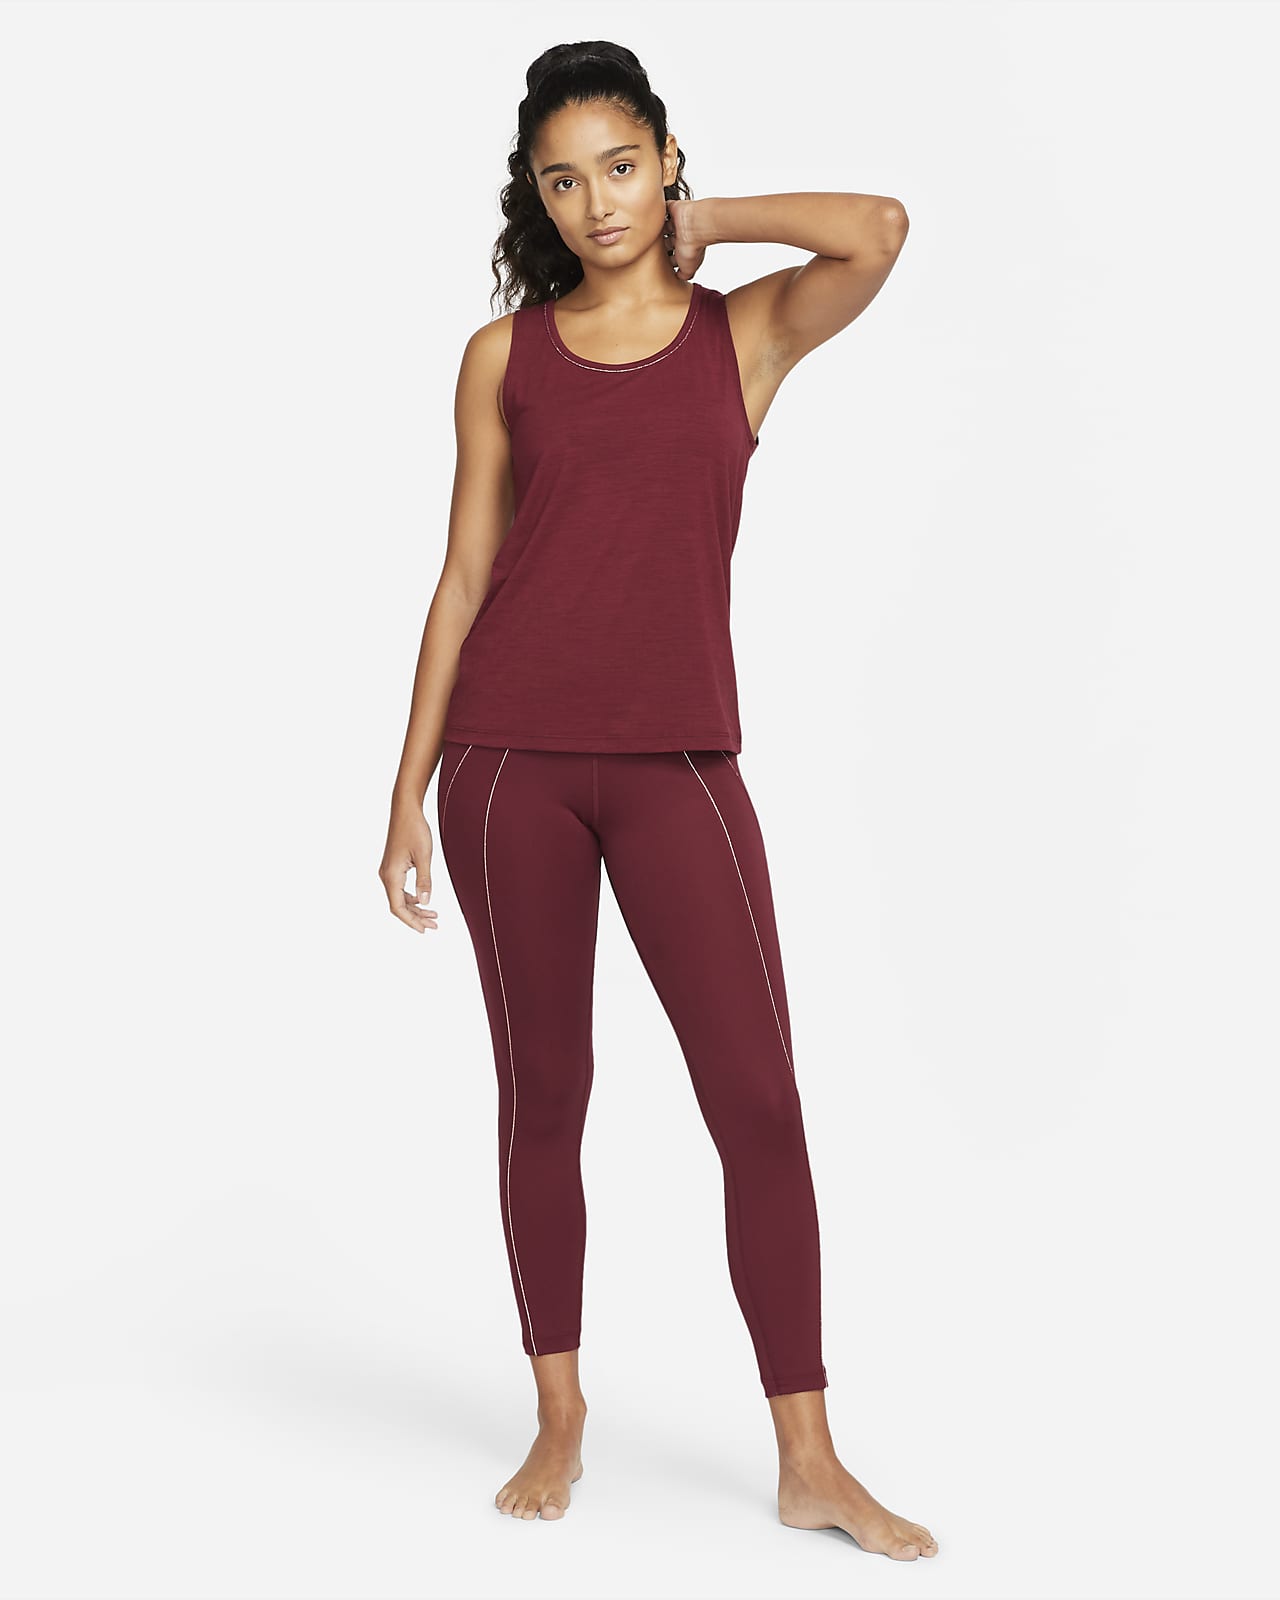 Nike Womens Yoga Dri-Fit T-Shirt - Purple